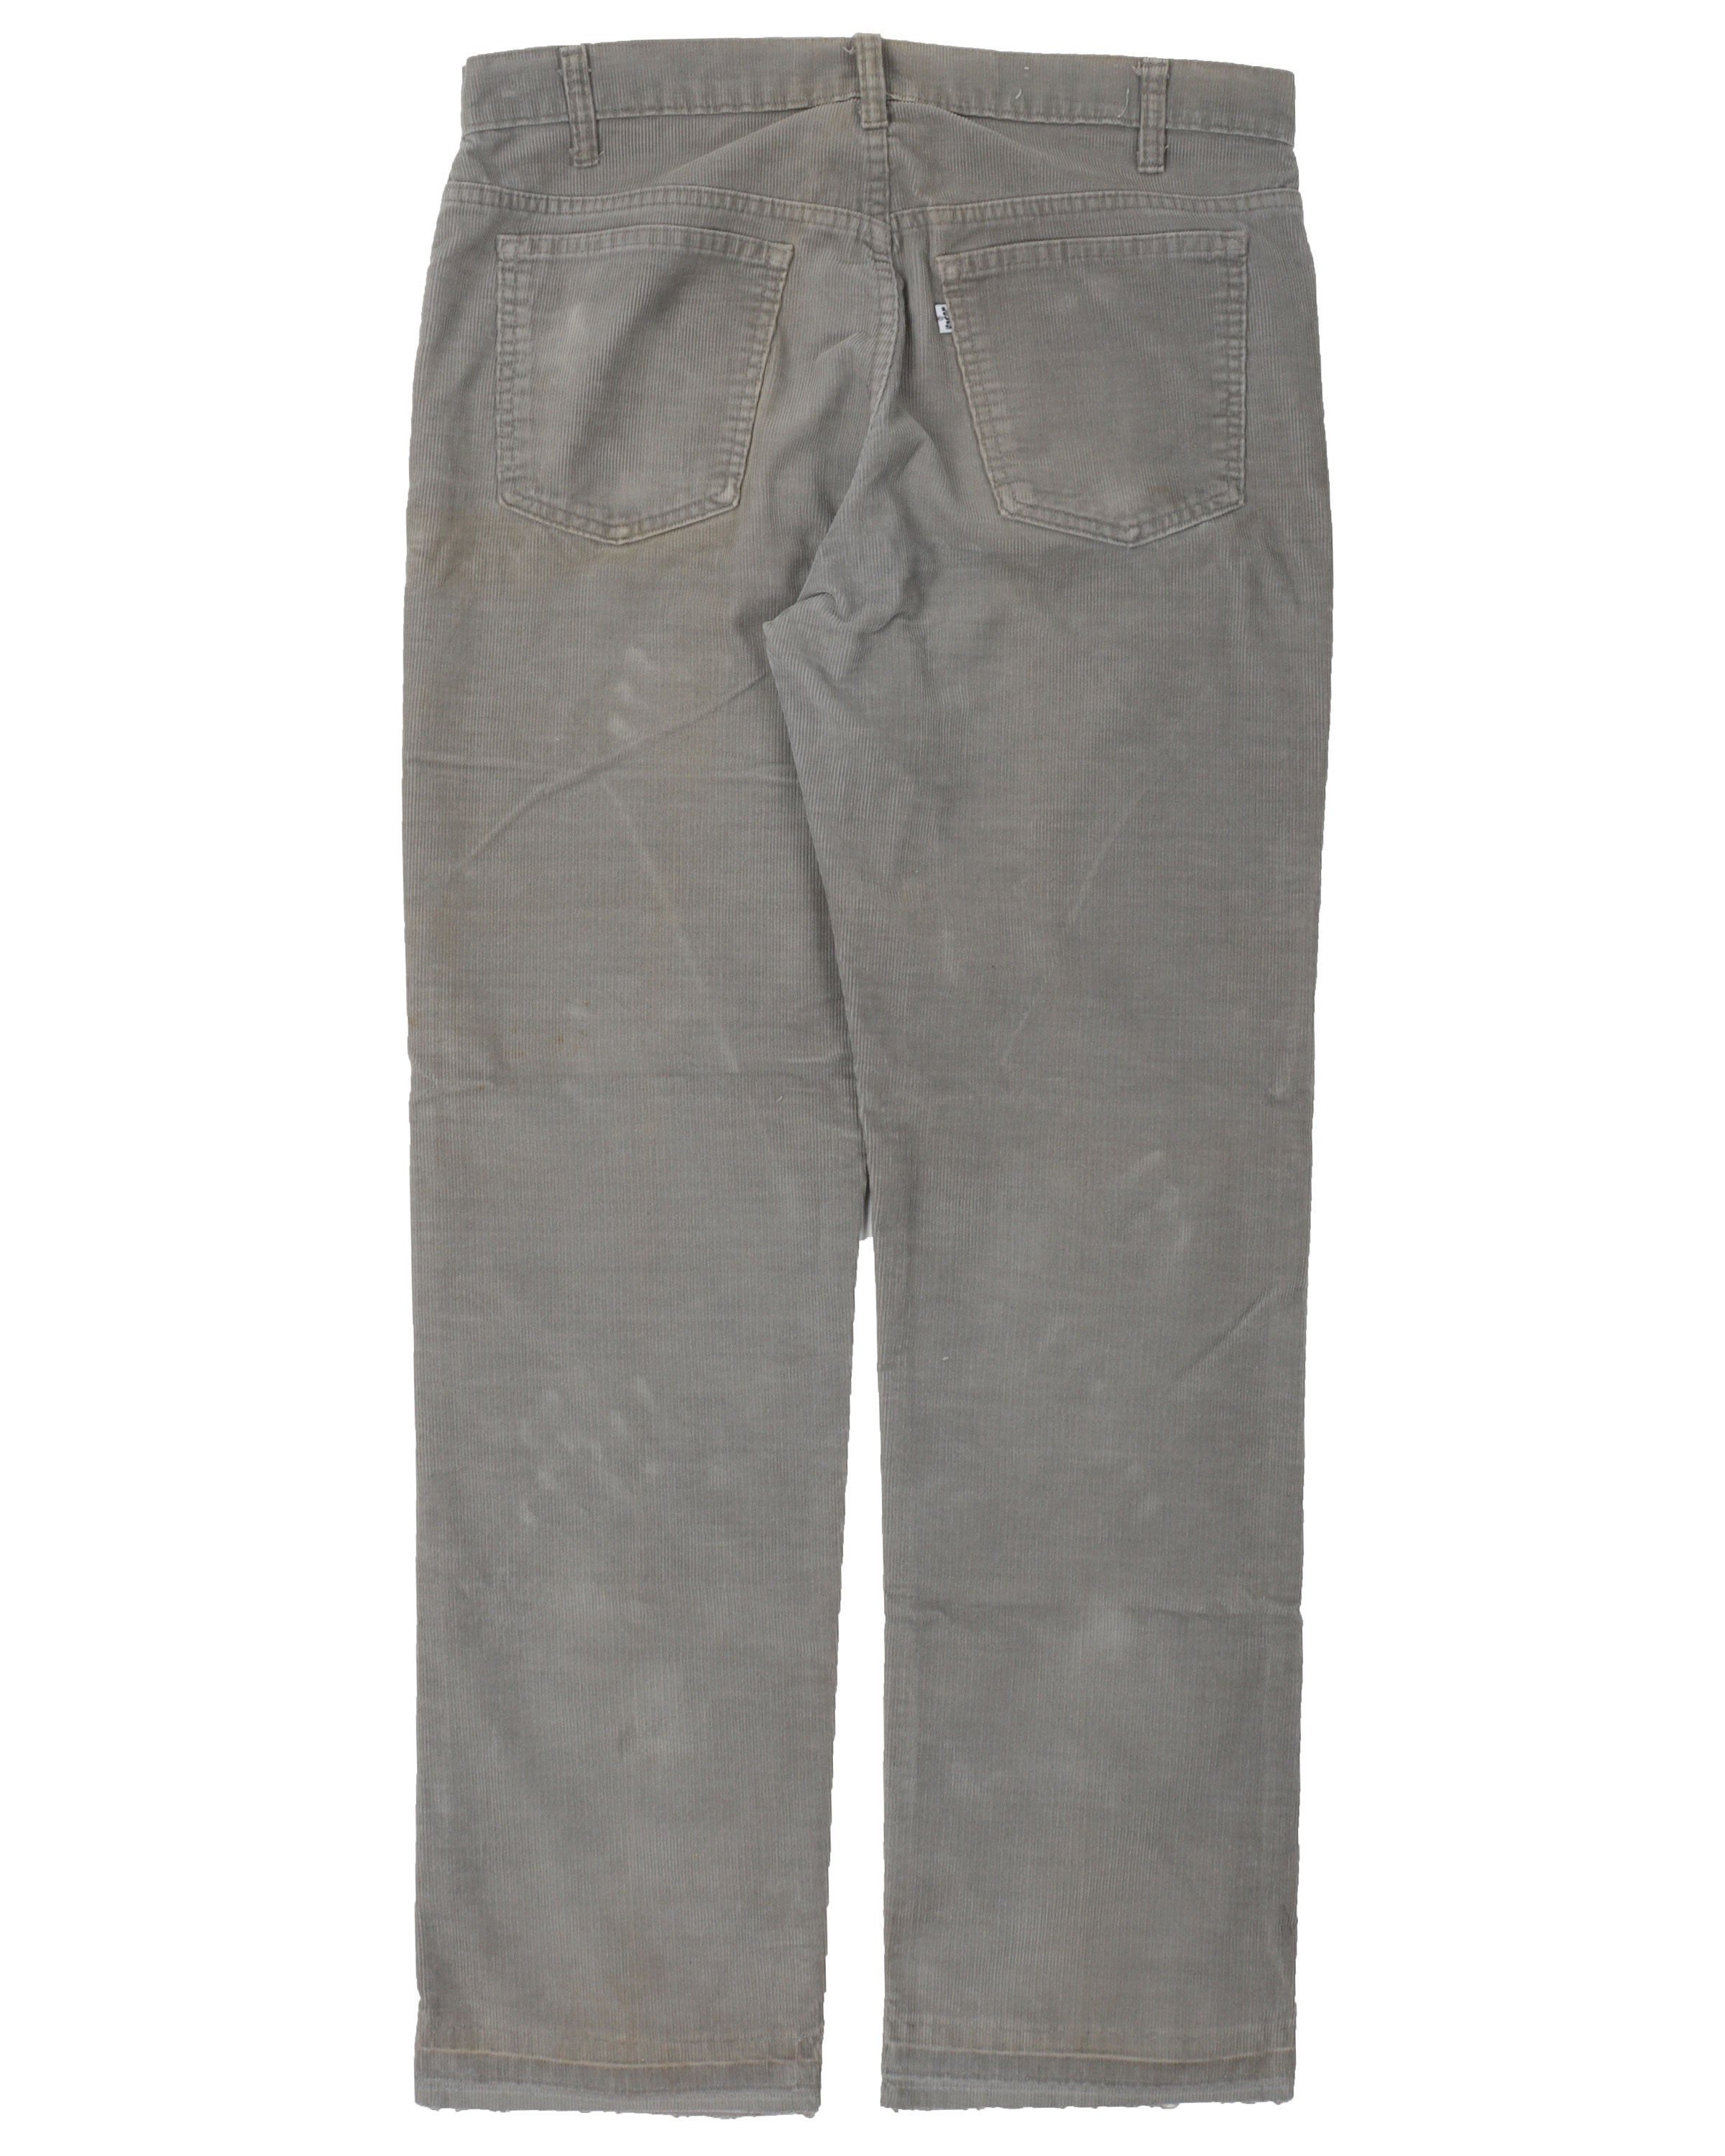 Levi's Grey Corduroy Pants